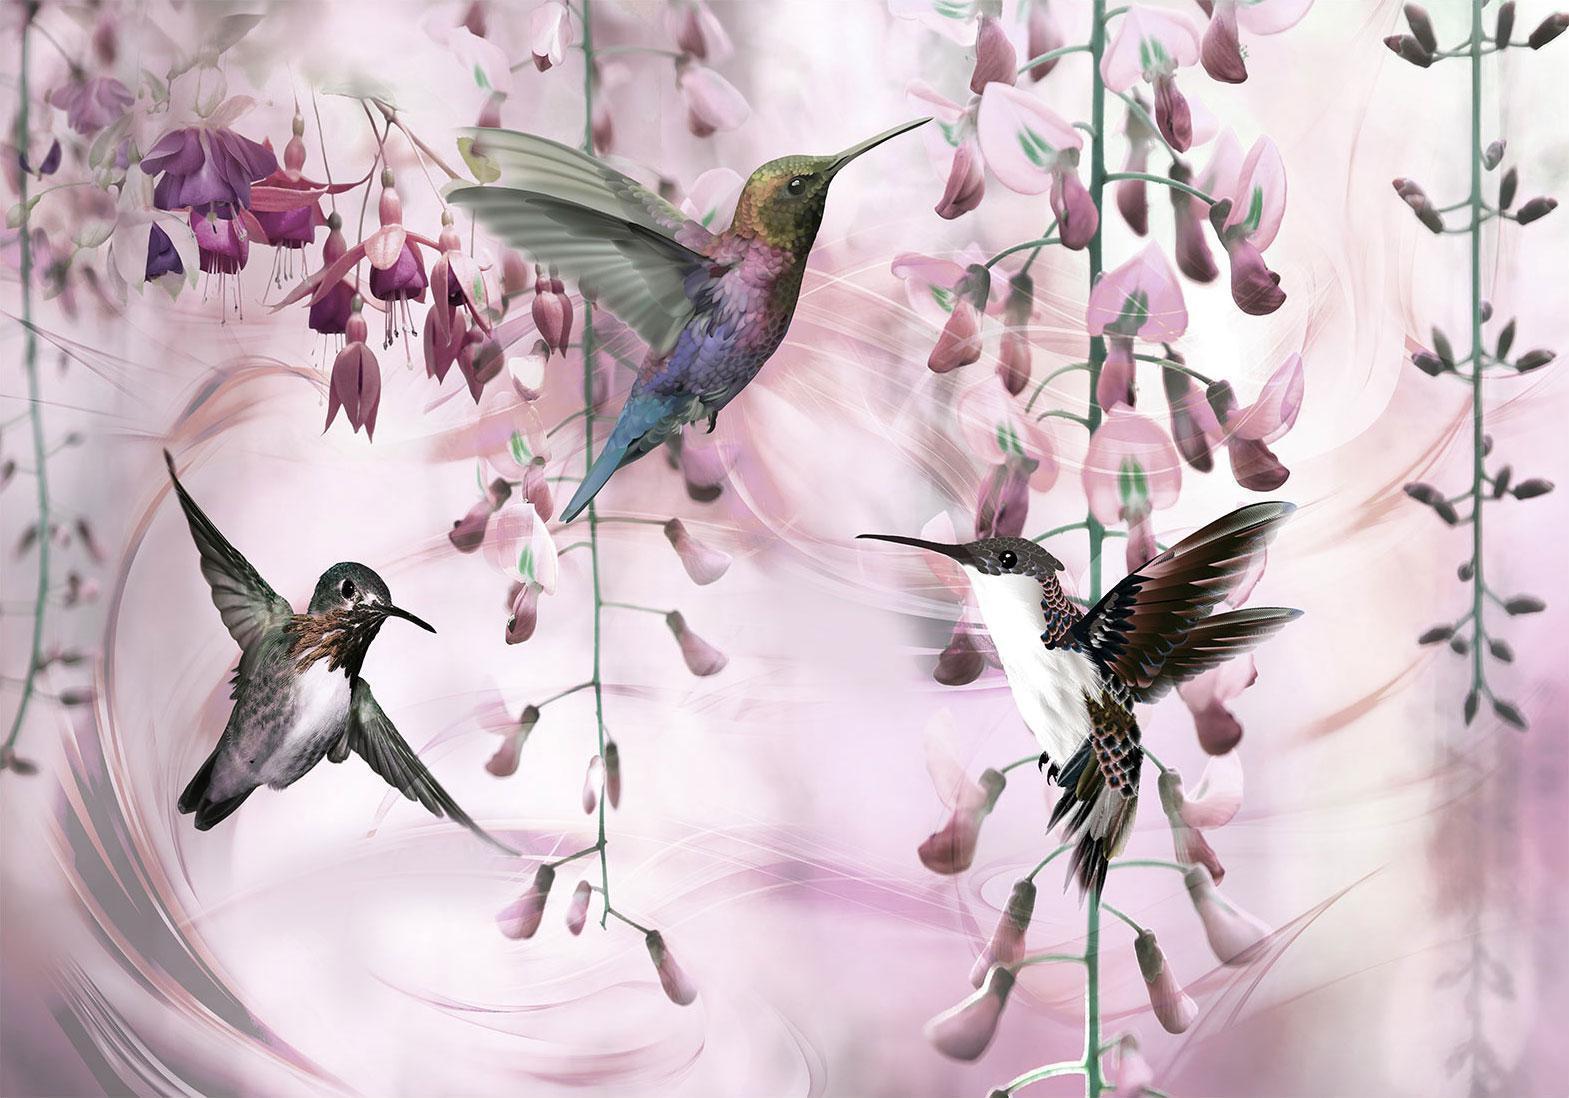 Papier peint - Flying Hummingbirds (Pink)